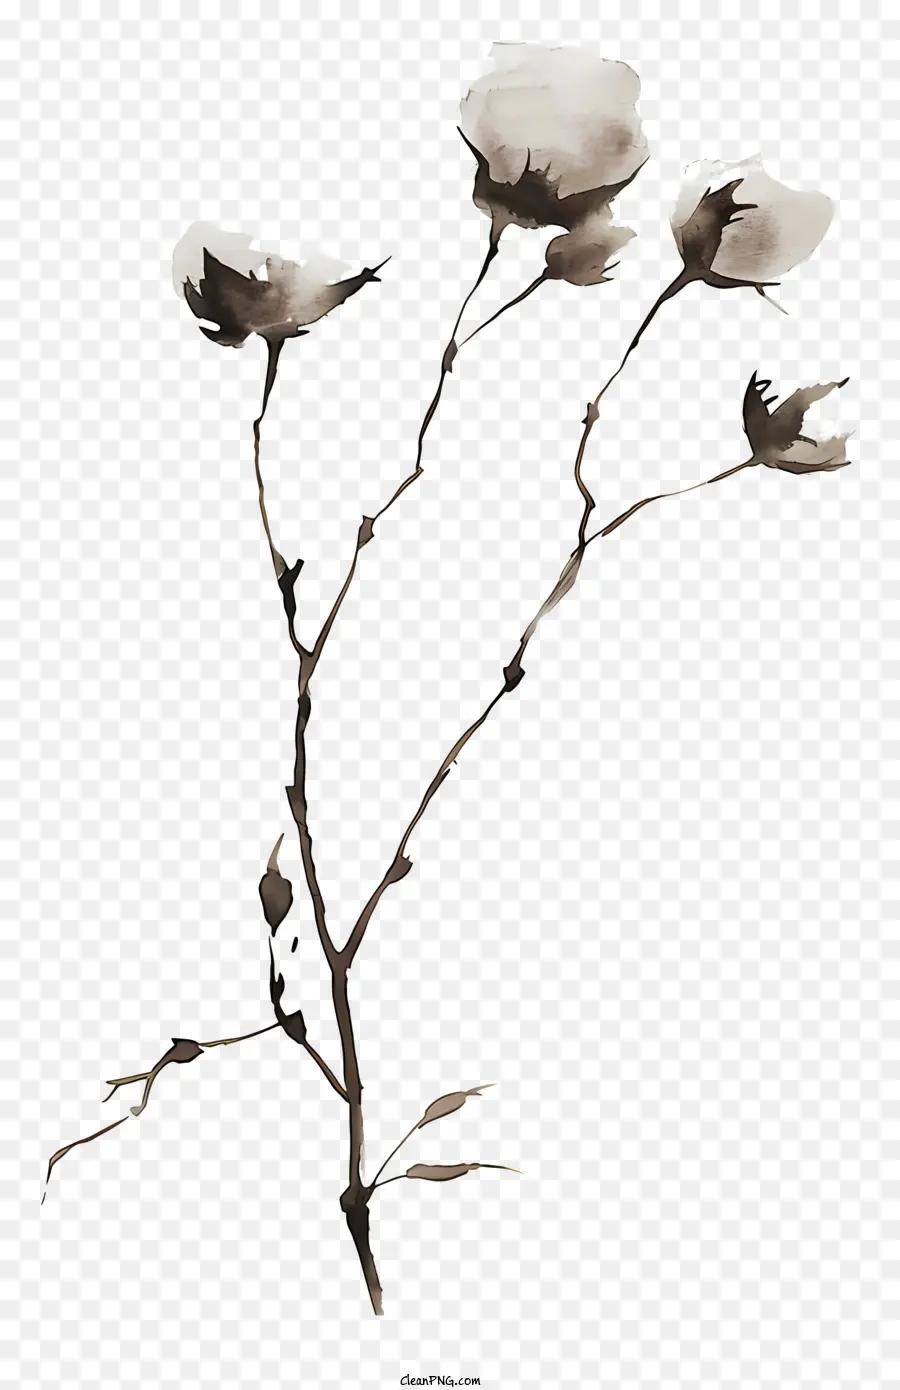 Cotton cotton cành hoa màu trắng cluster cluster cluster - Hoa trắng trên nhánh cây xoắn